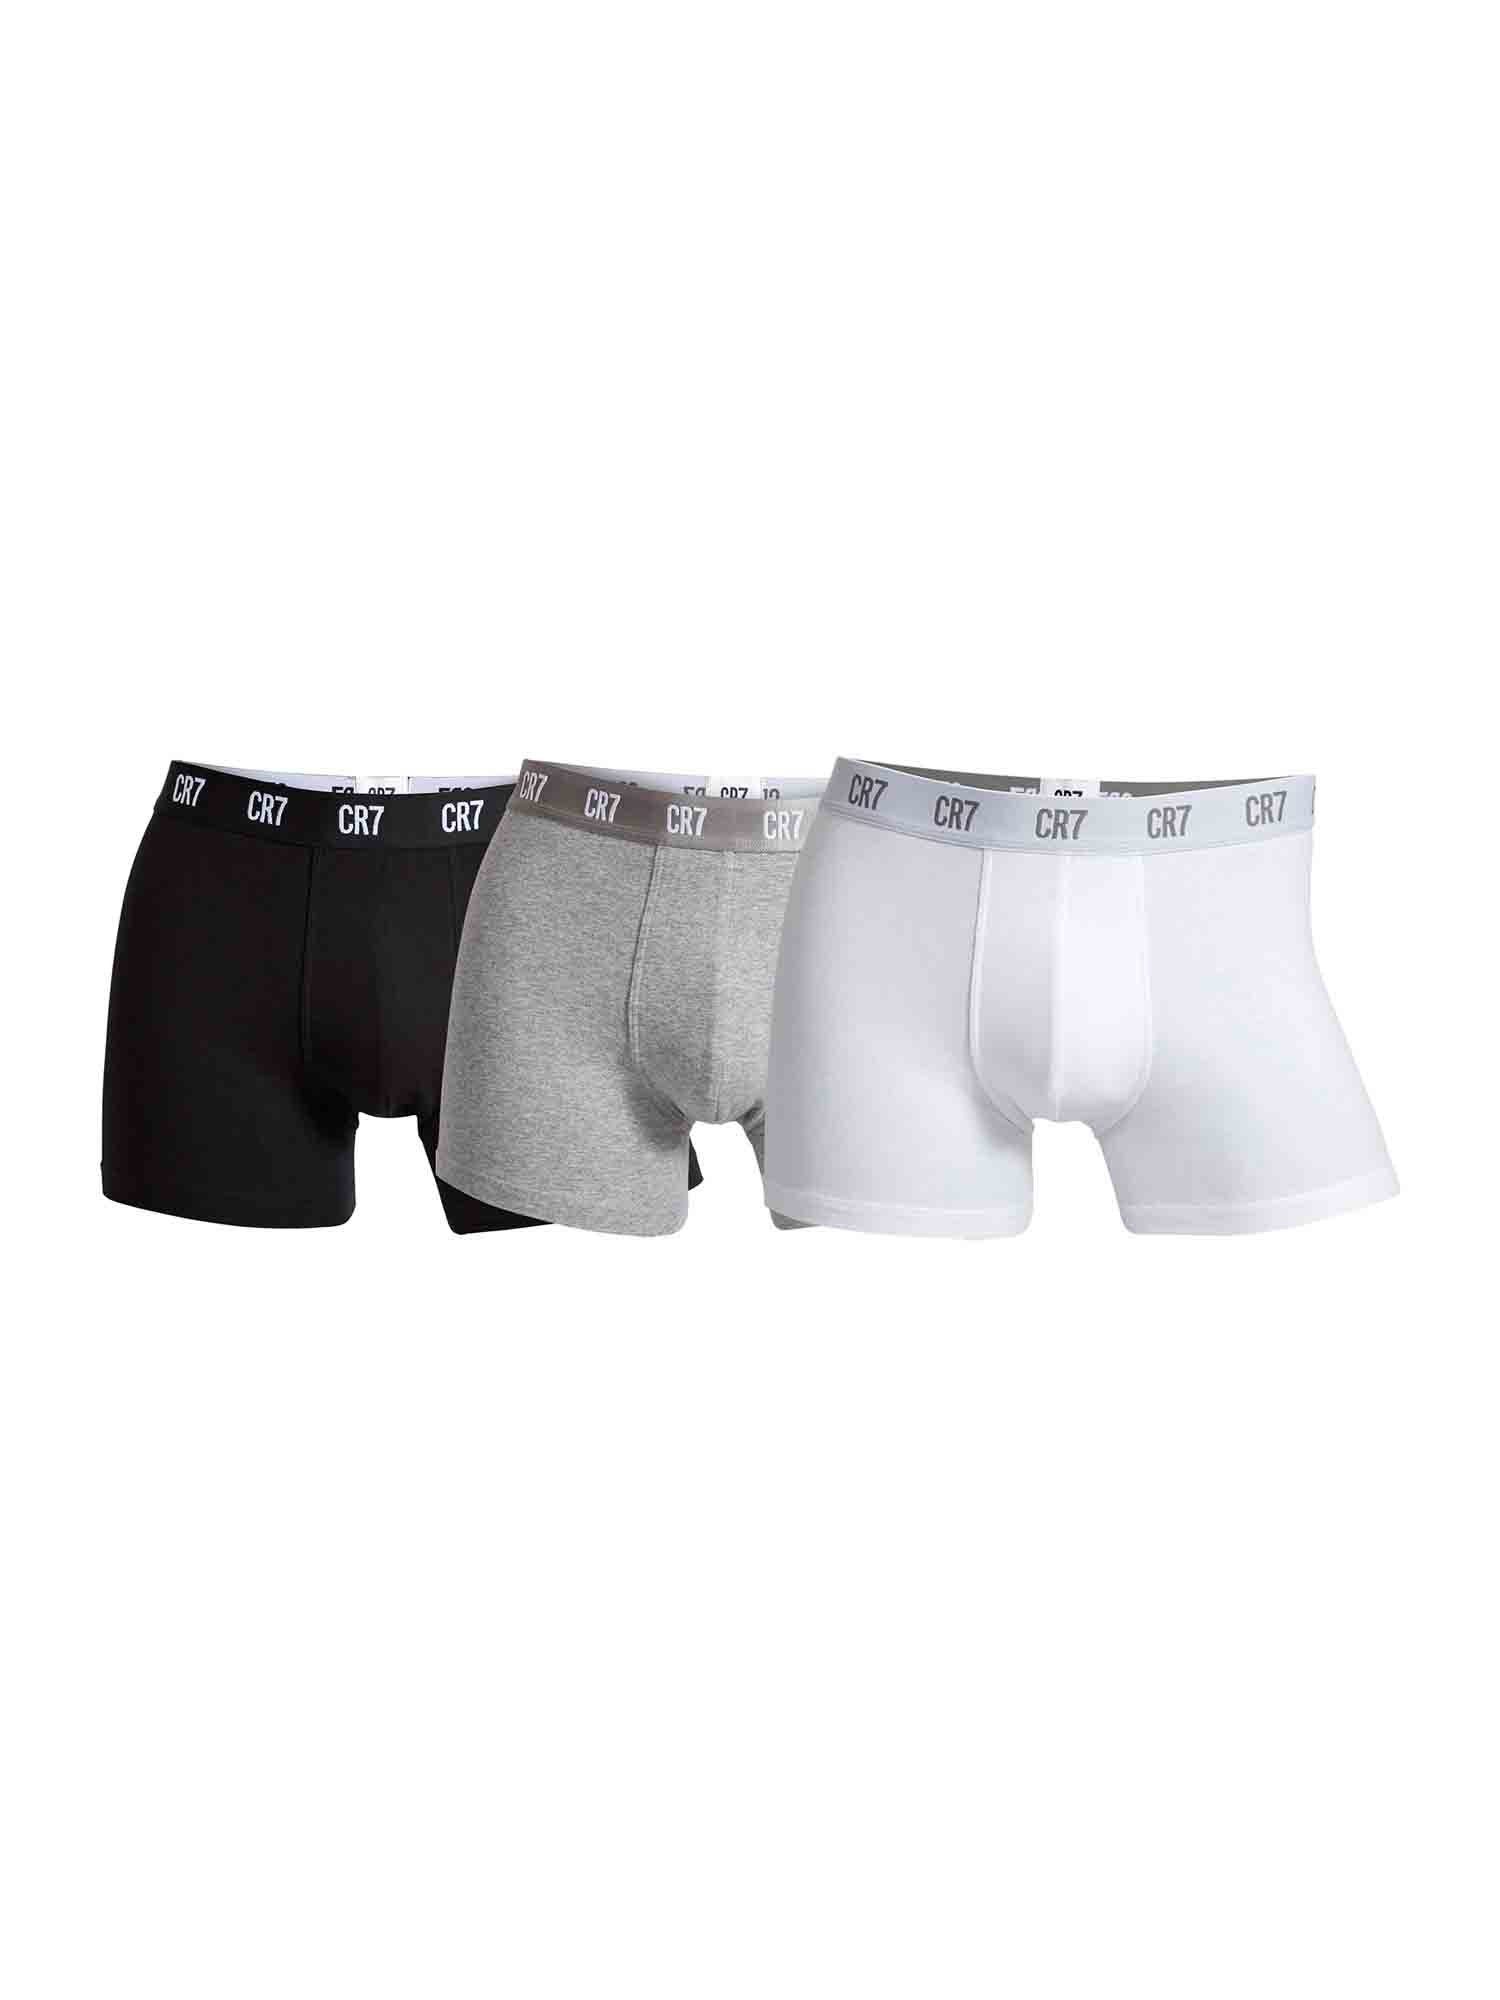 CR7 Retro Pants Pants Retro Herren Boxershorts Multi Multipack Männer Trunks 3 (3-St)